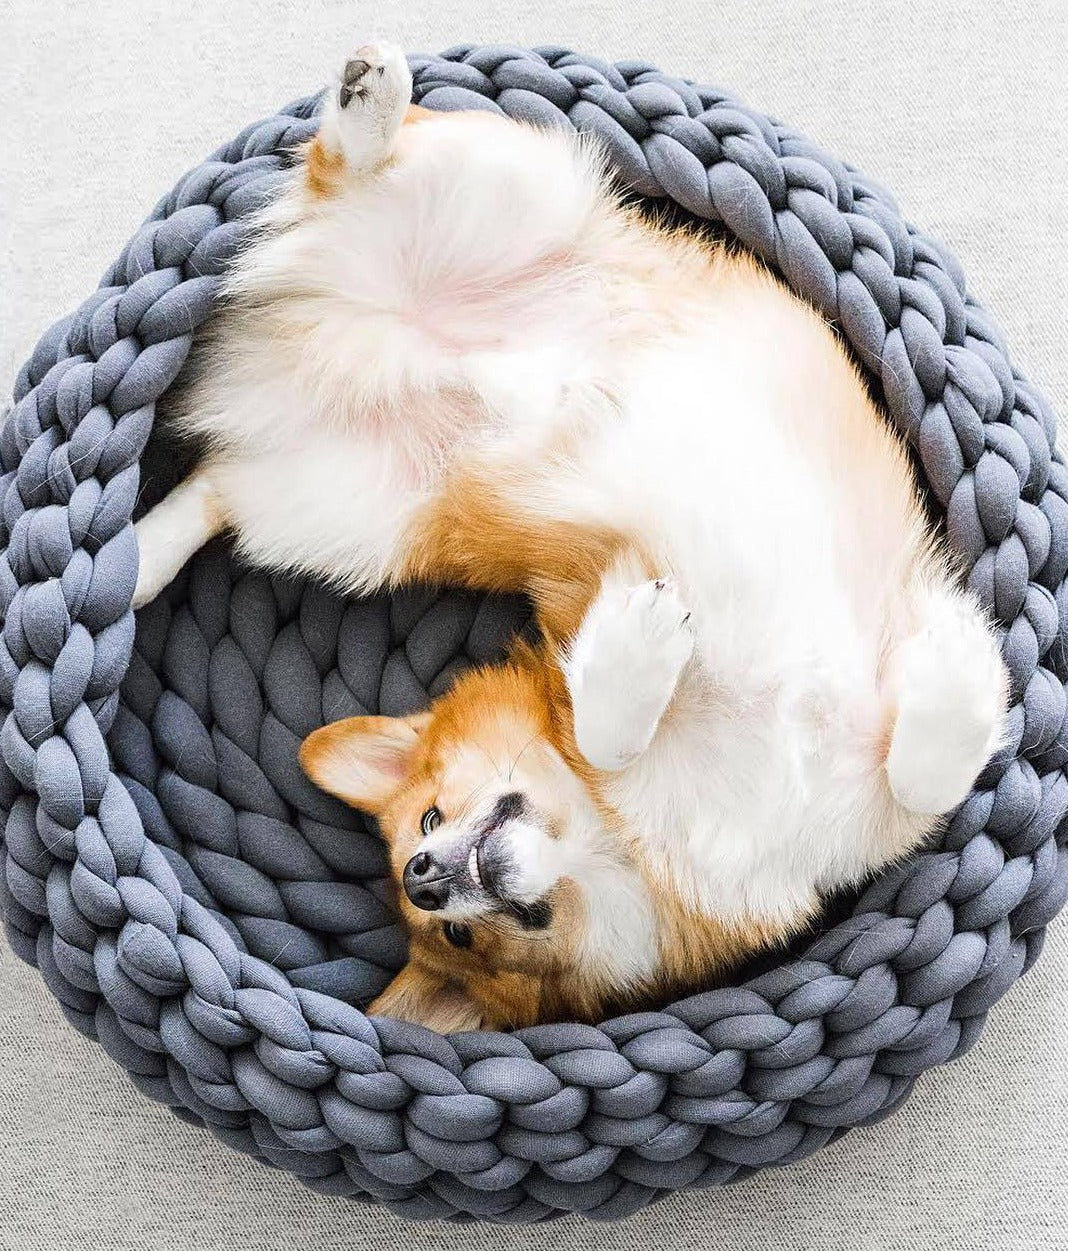 Hand-woven Pet Sleeping Basket